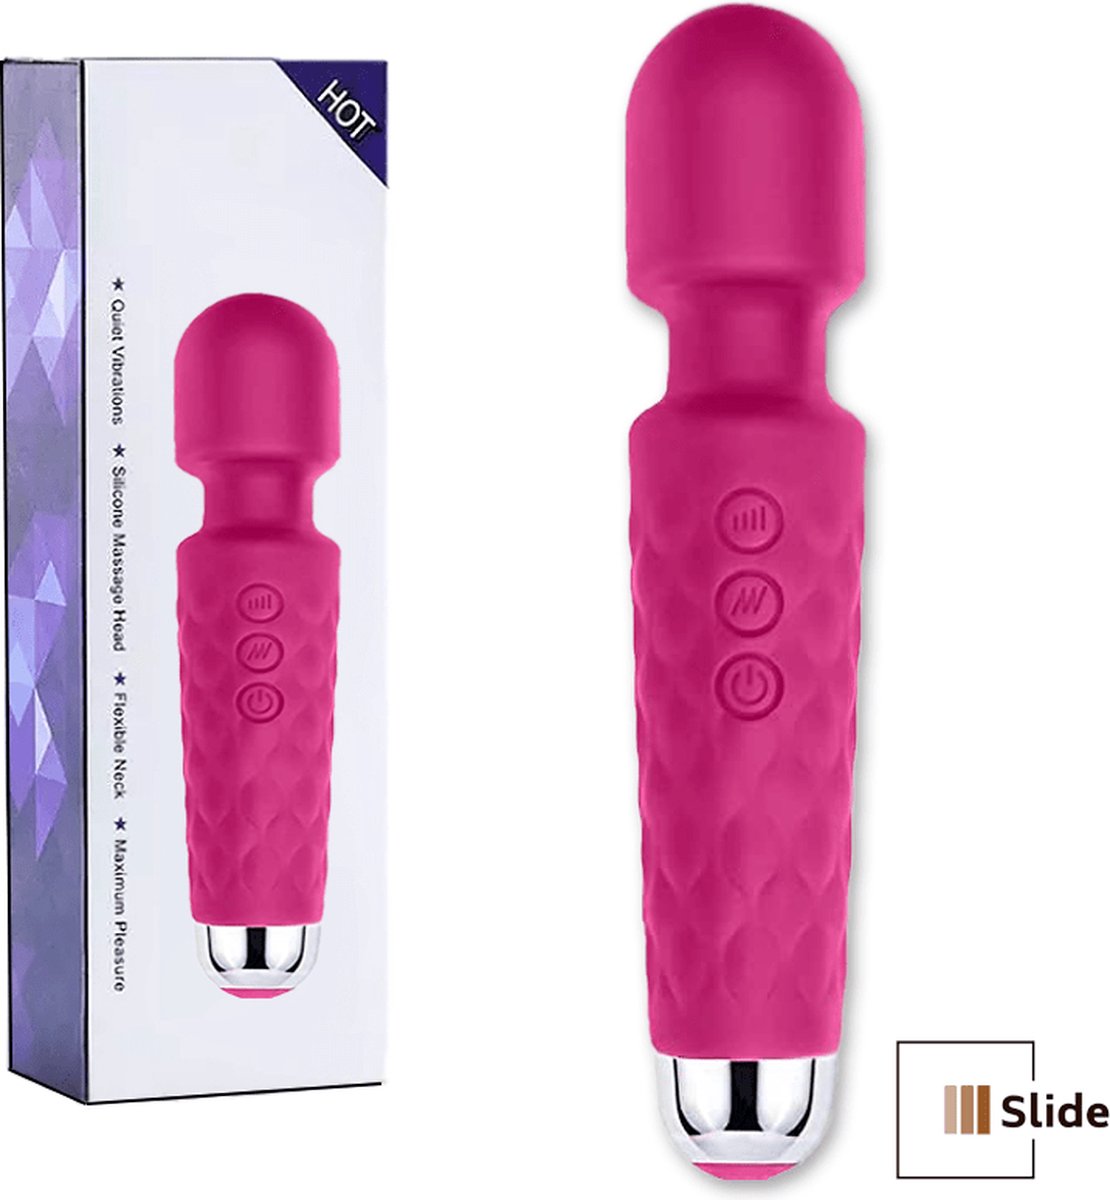 Slide® Massager and Wand Vibrator - G Spot Vibrator & Clitoris Stimulator - Silent Vibrators for Women - Sex Toys also for Couples - Erotic - Roze Rood